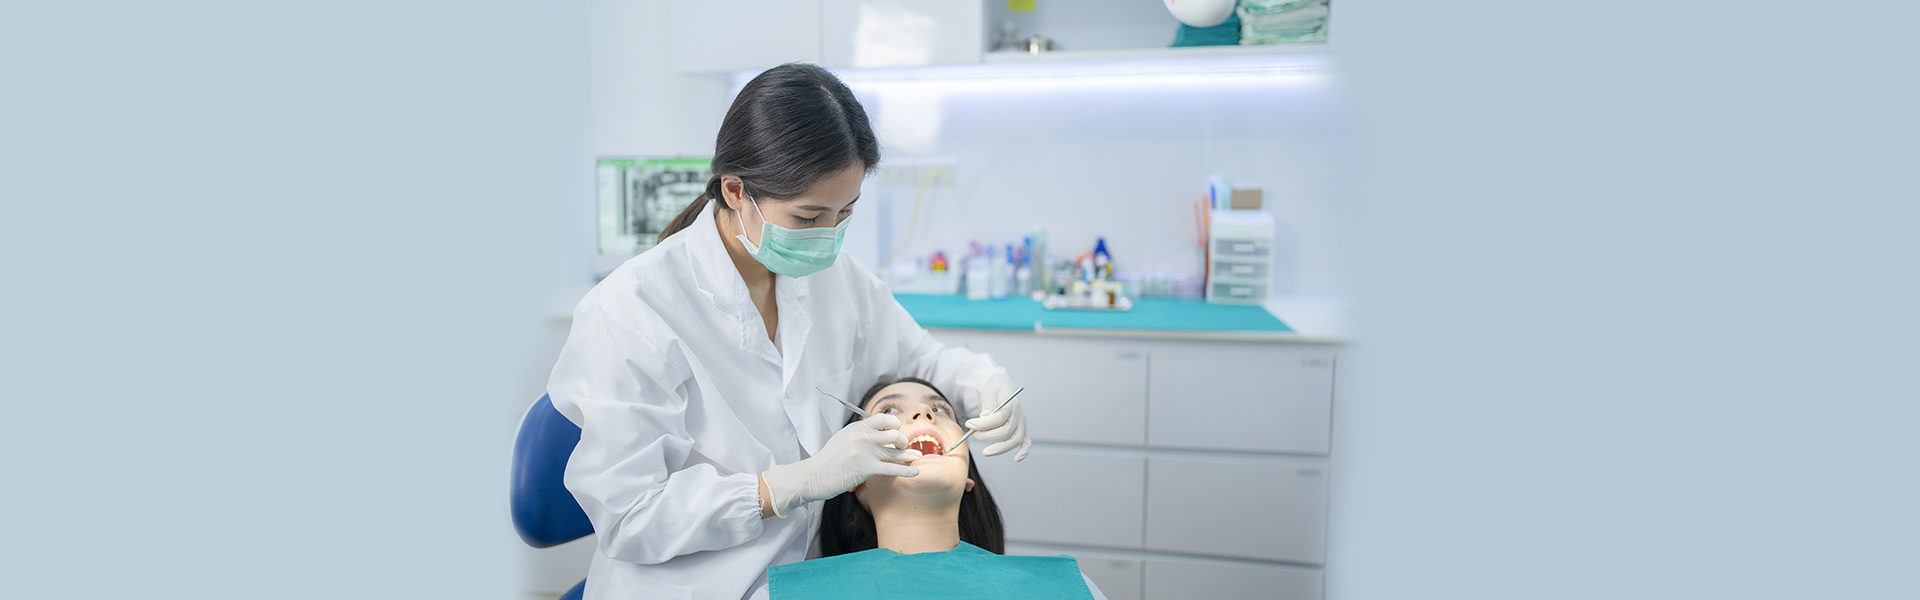 How to Rejuvenate Your Smile with Dental Bonding